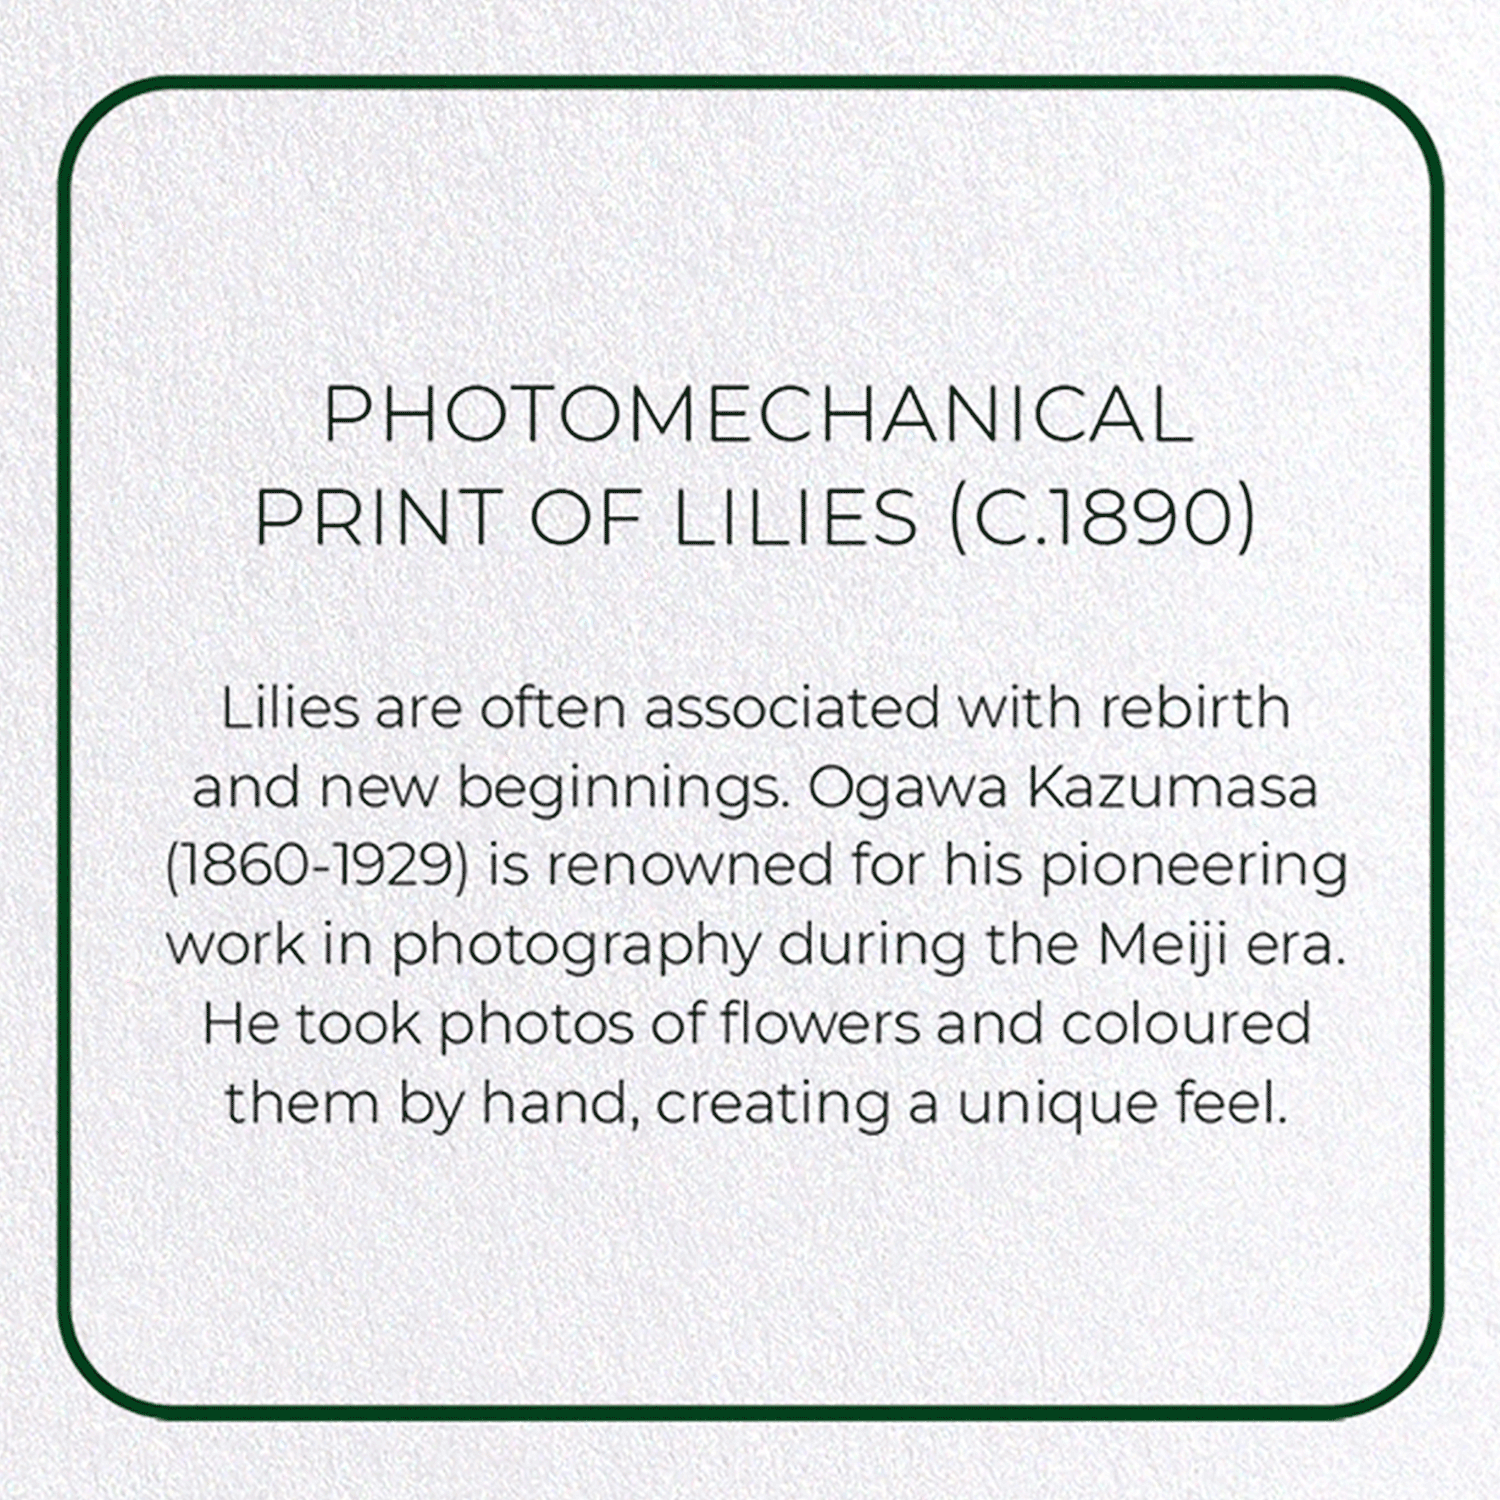 PHOTOMECHANICAL PRINT OF LILIES (C.1890): Photo Greeting Card